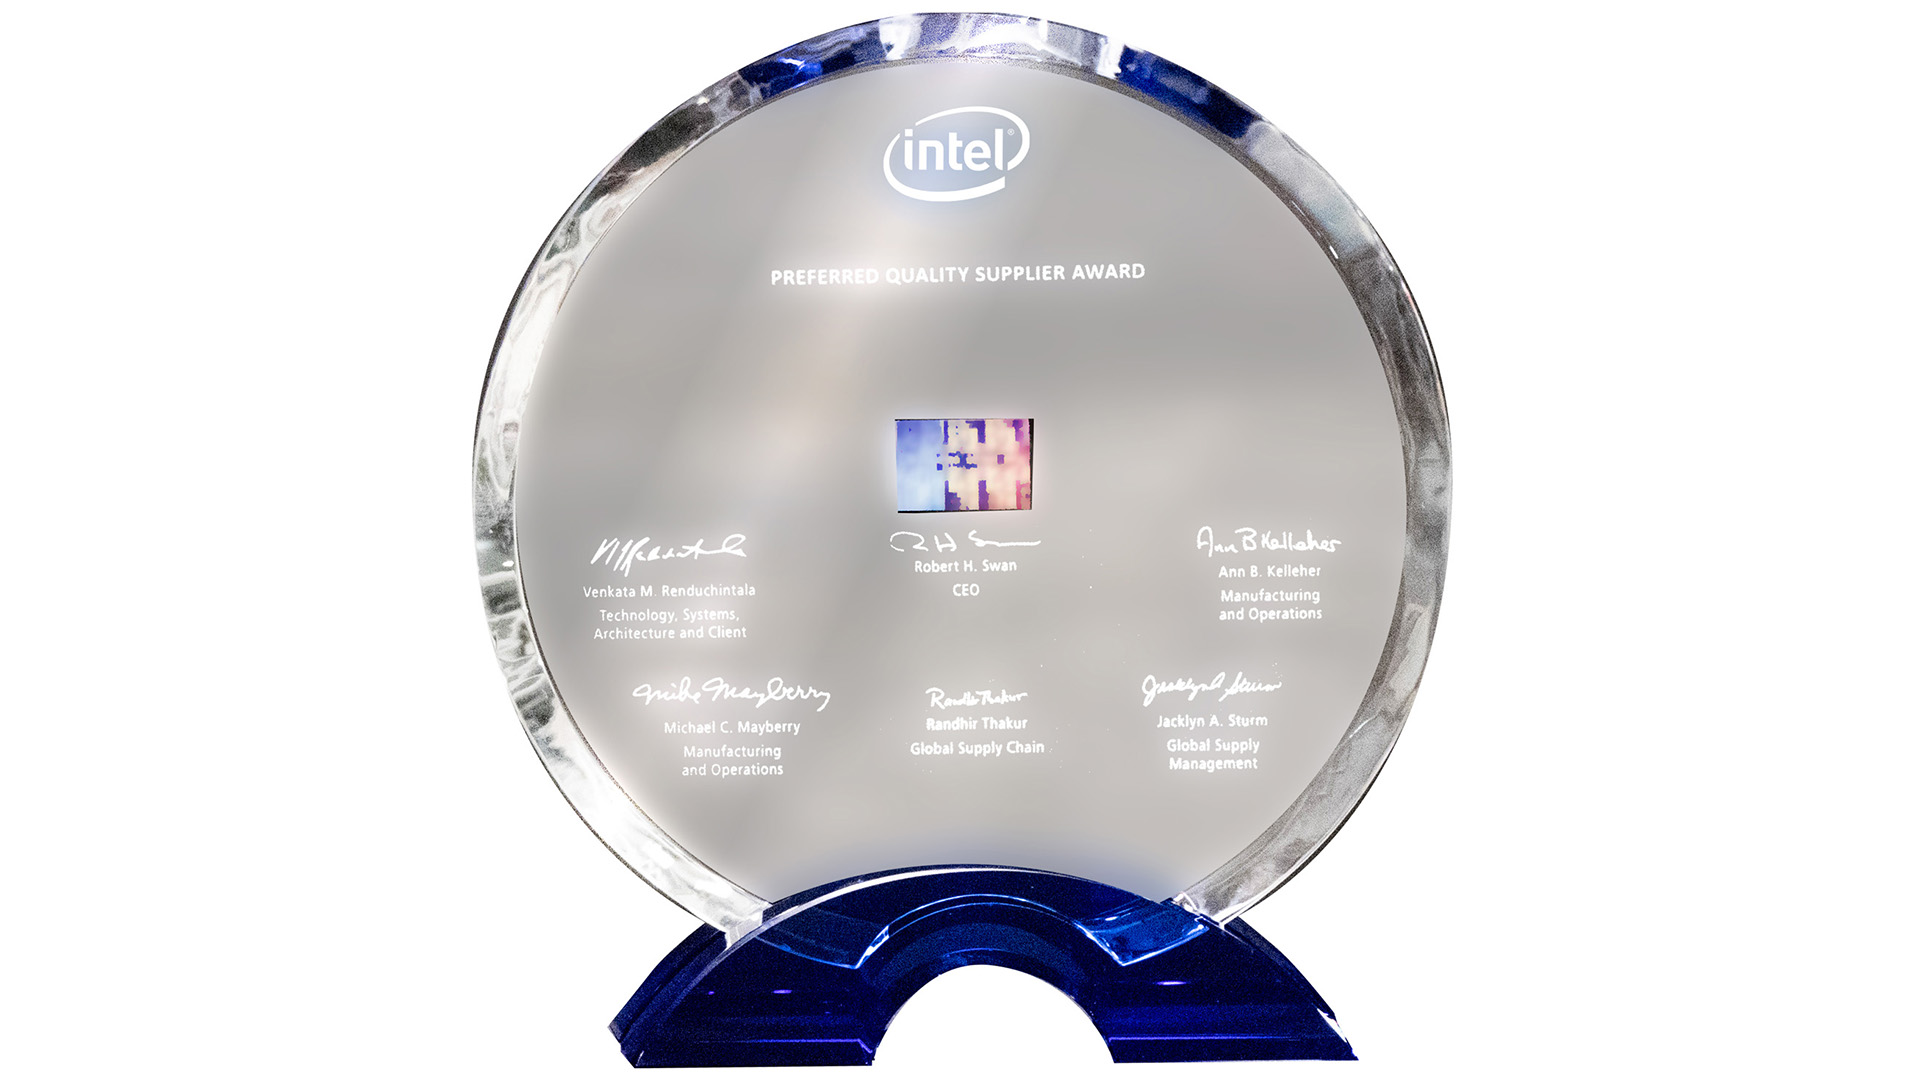 Intel PQS Trophy won by ZEISS SMT